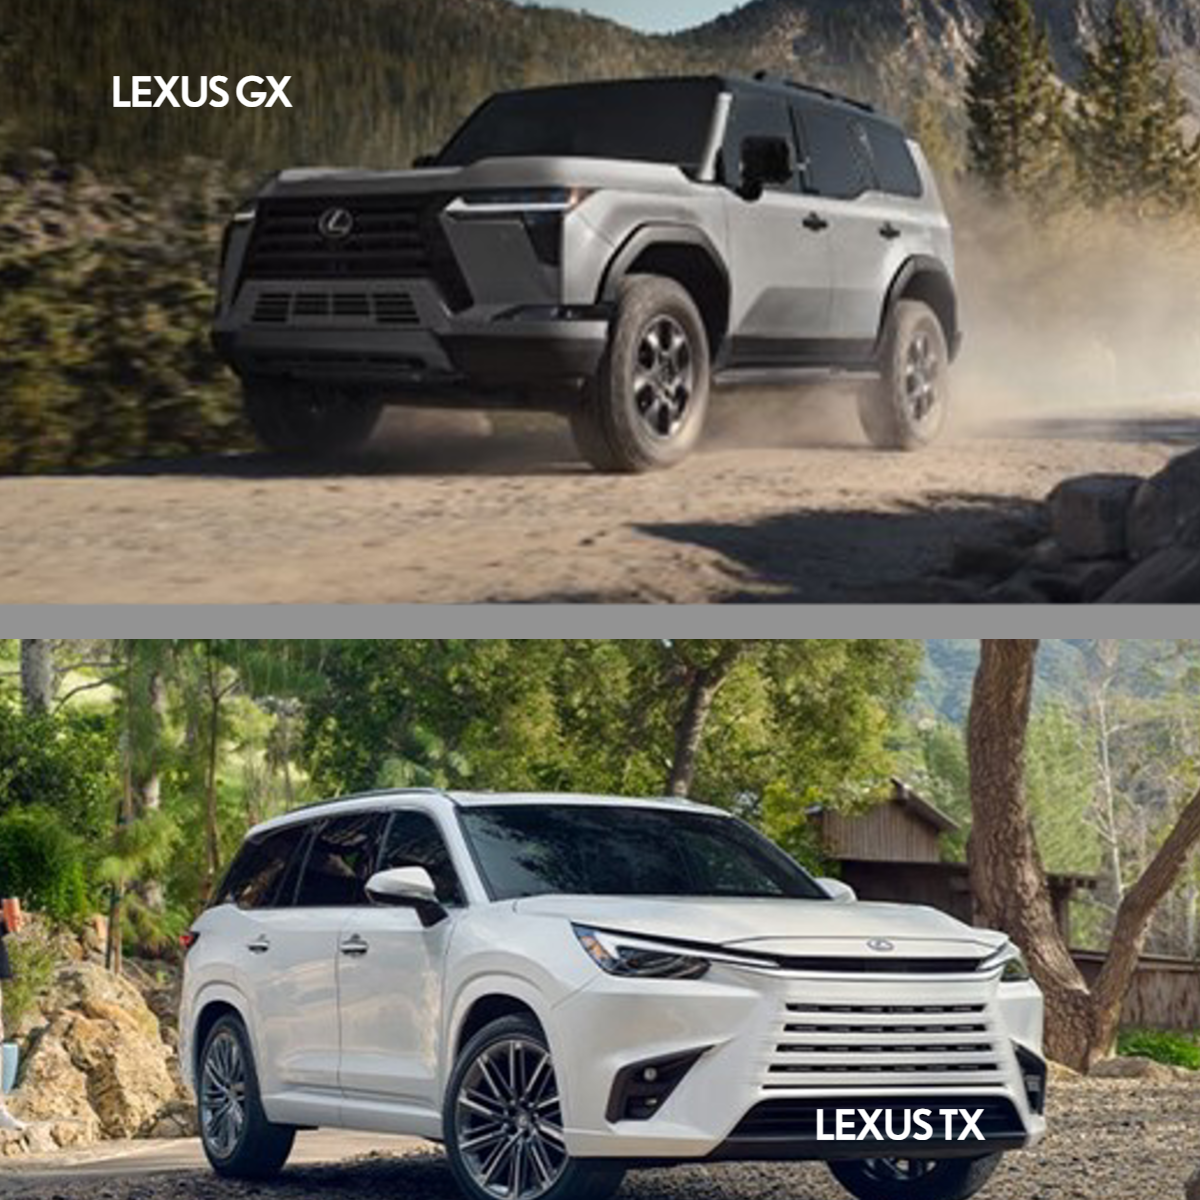 Lexus TX vs GX